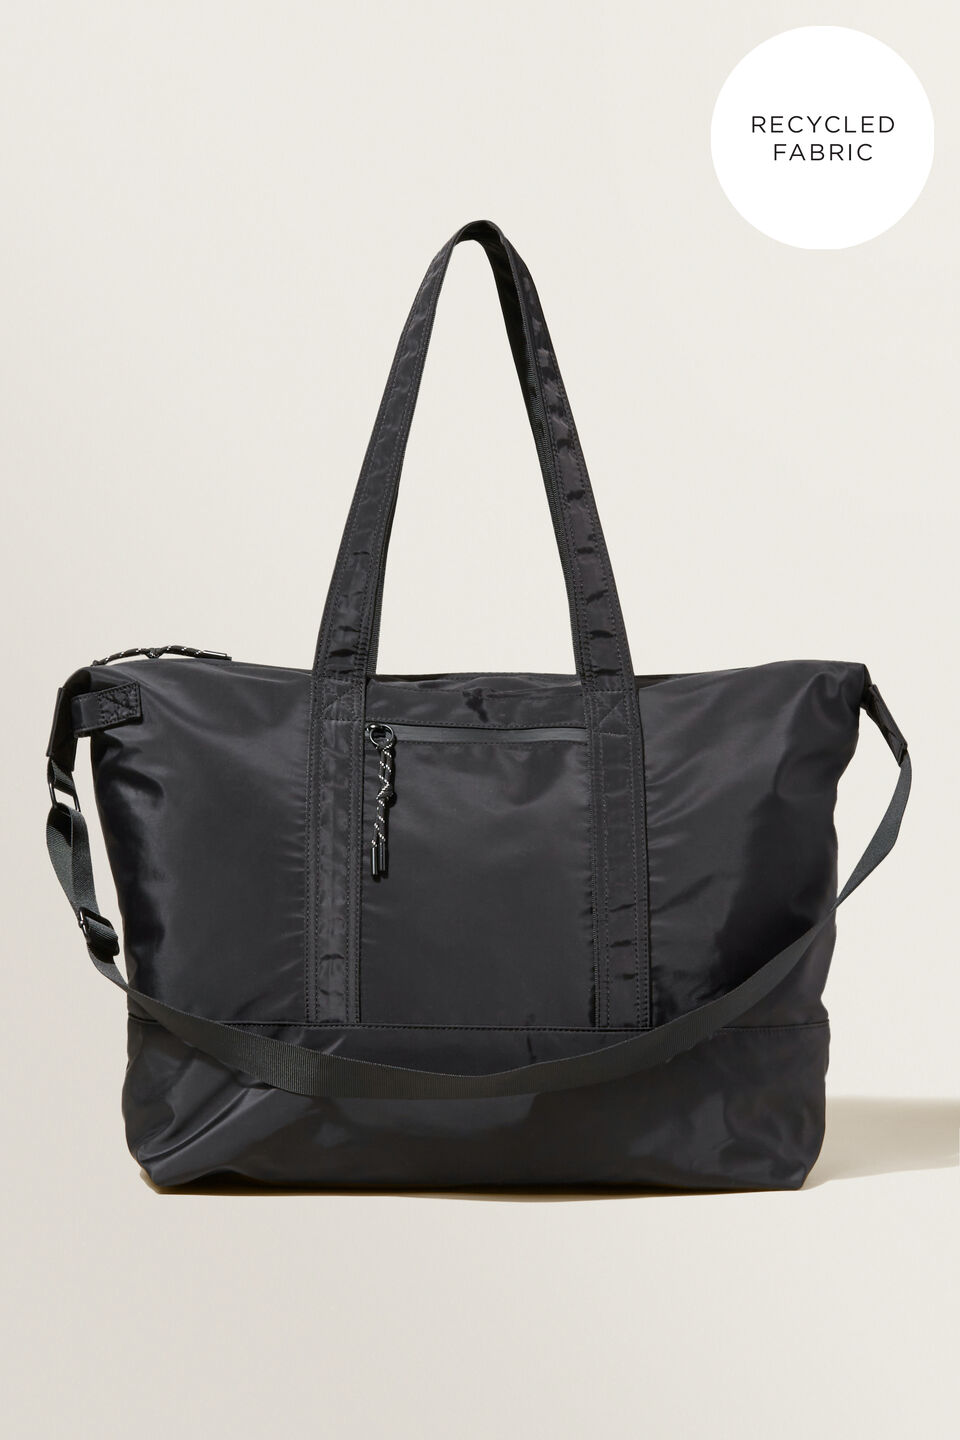 Recycled Travel Bag  Black